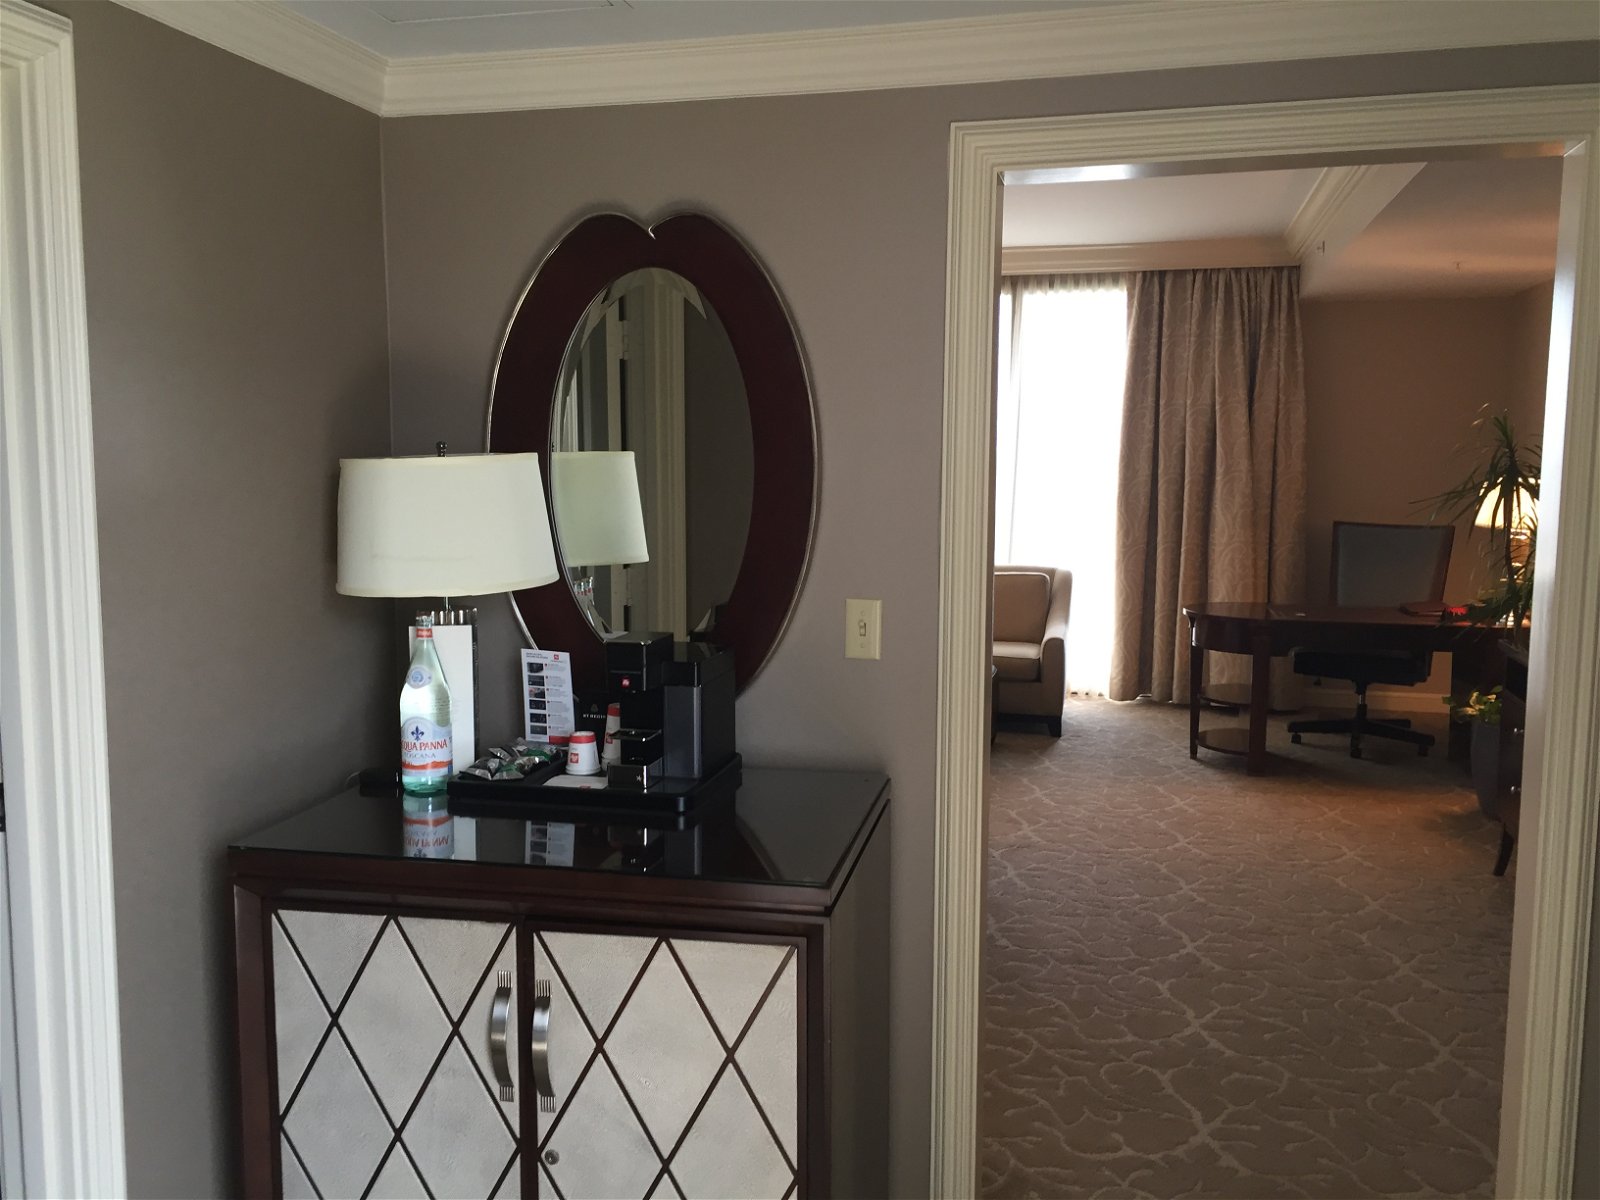 St. Regis Houston Grand Luxe Room minibar